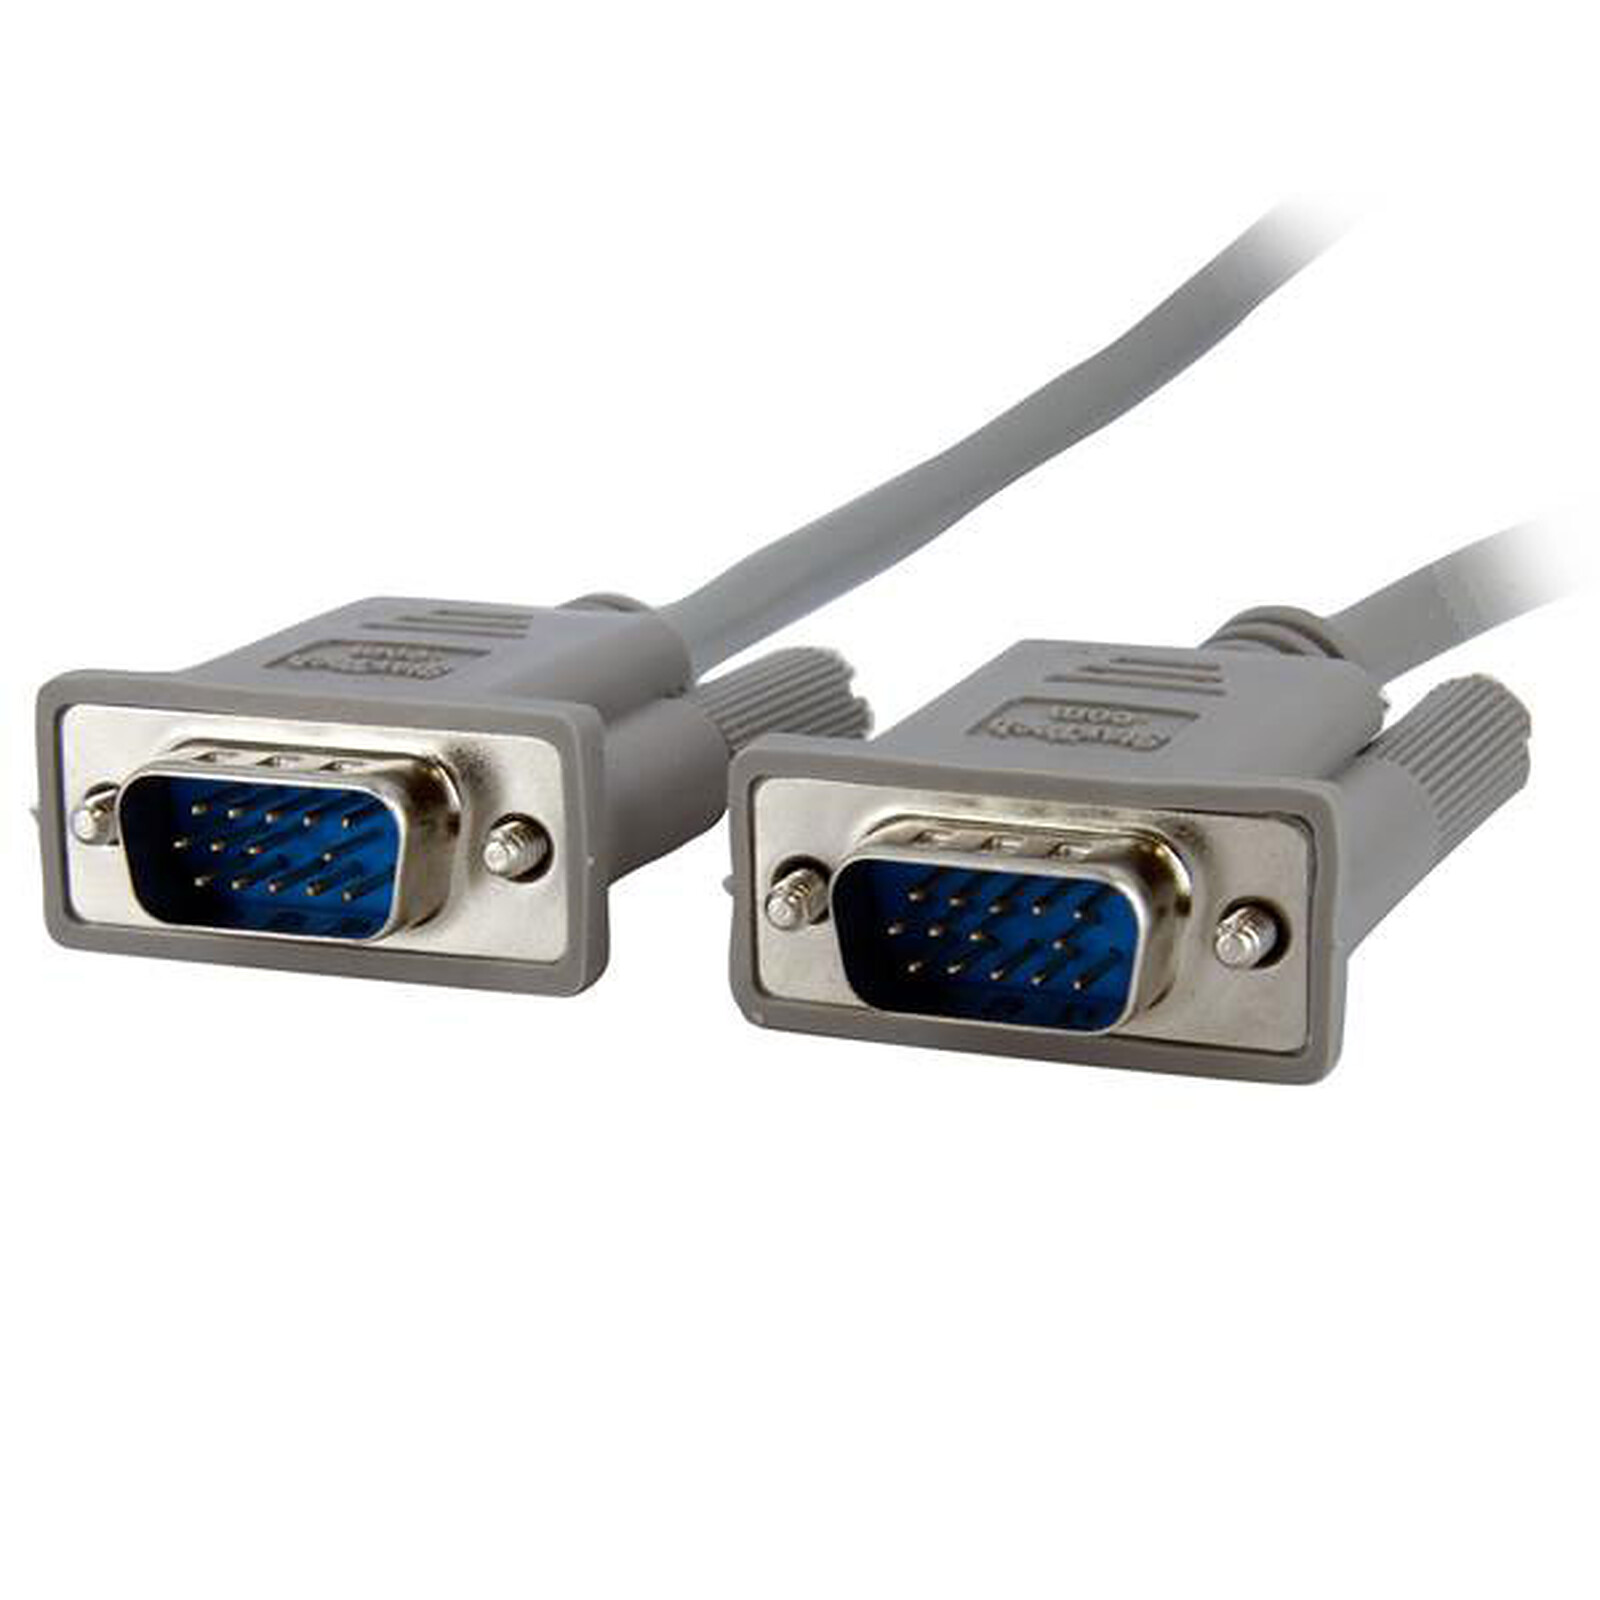 Cable VGA HD macho / macho (20 m) - VGA - LDLC